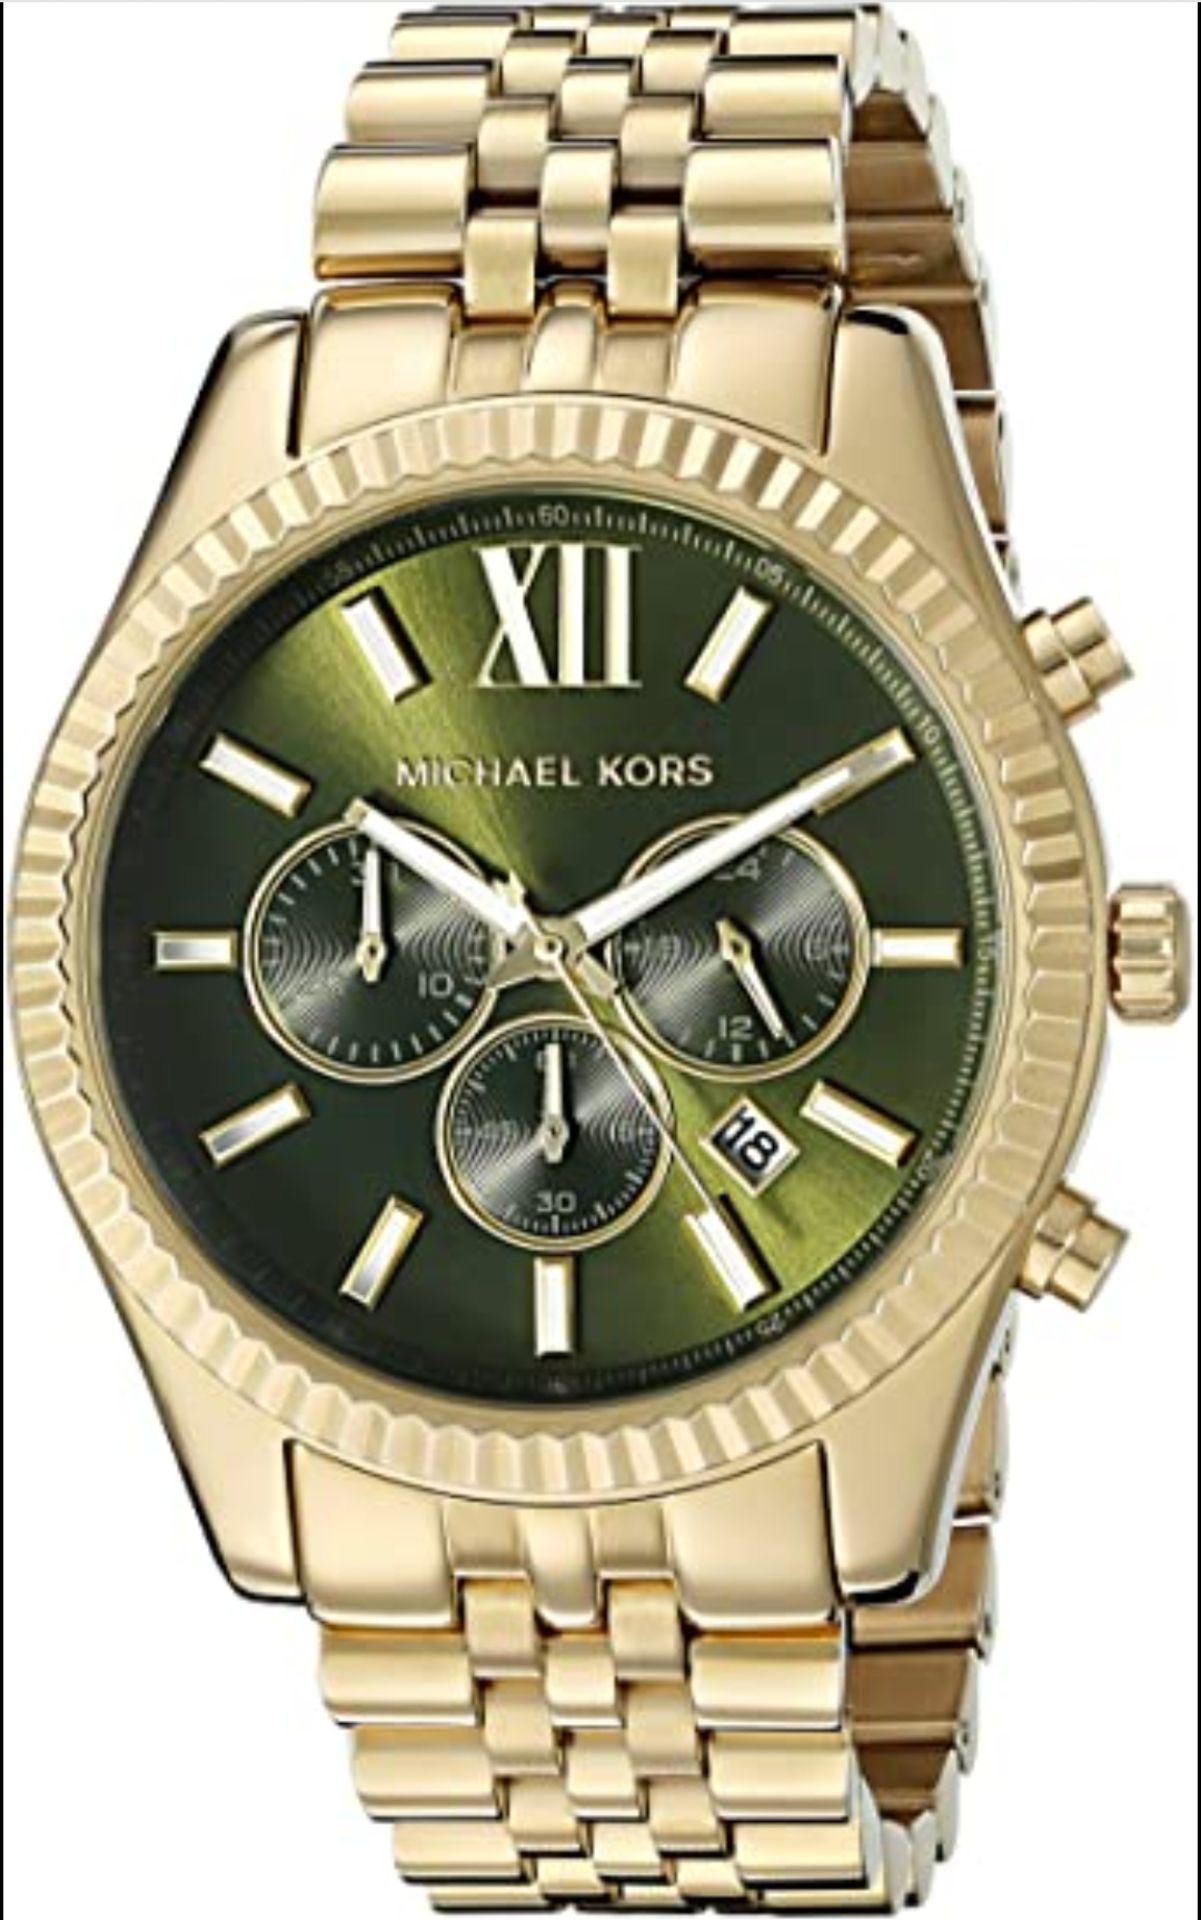 Michael Kors MK8446 Men's Lexington Watch - Image 4 of 8